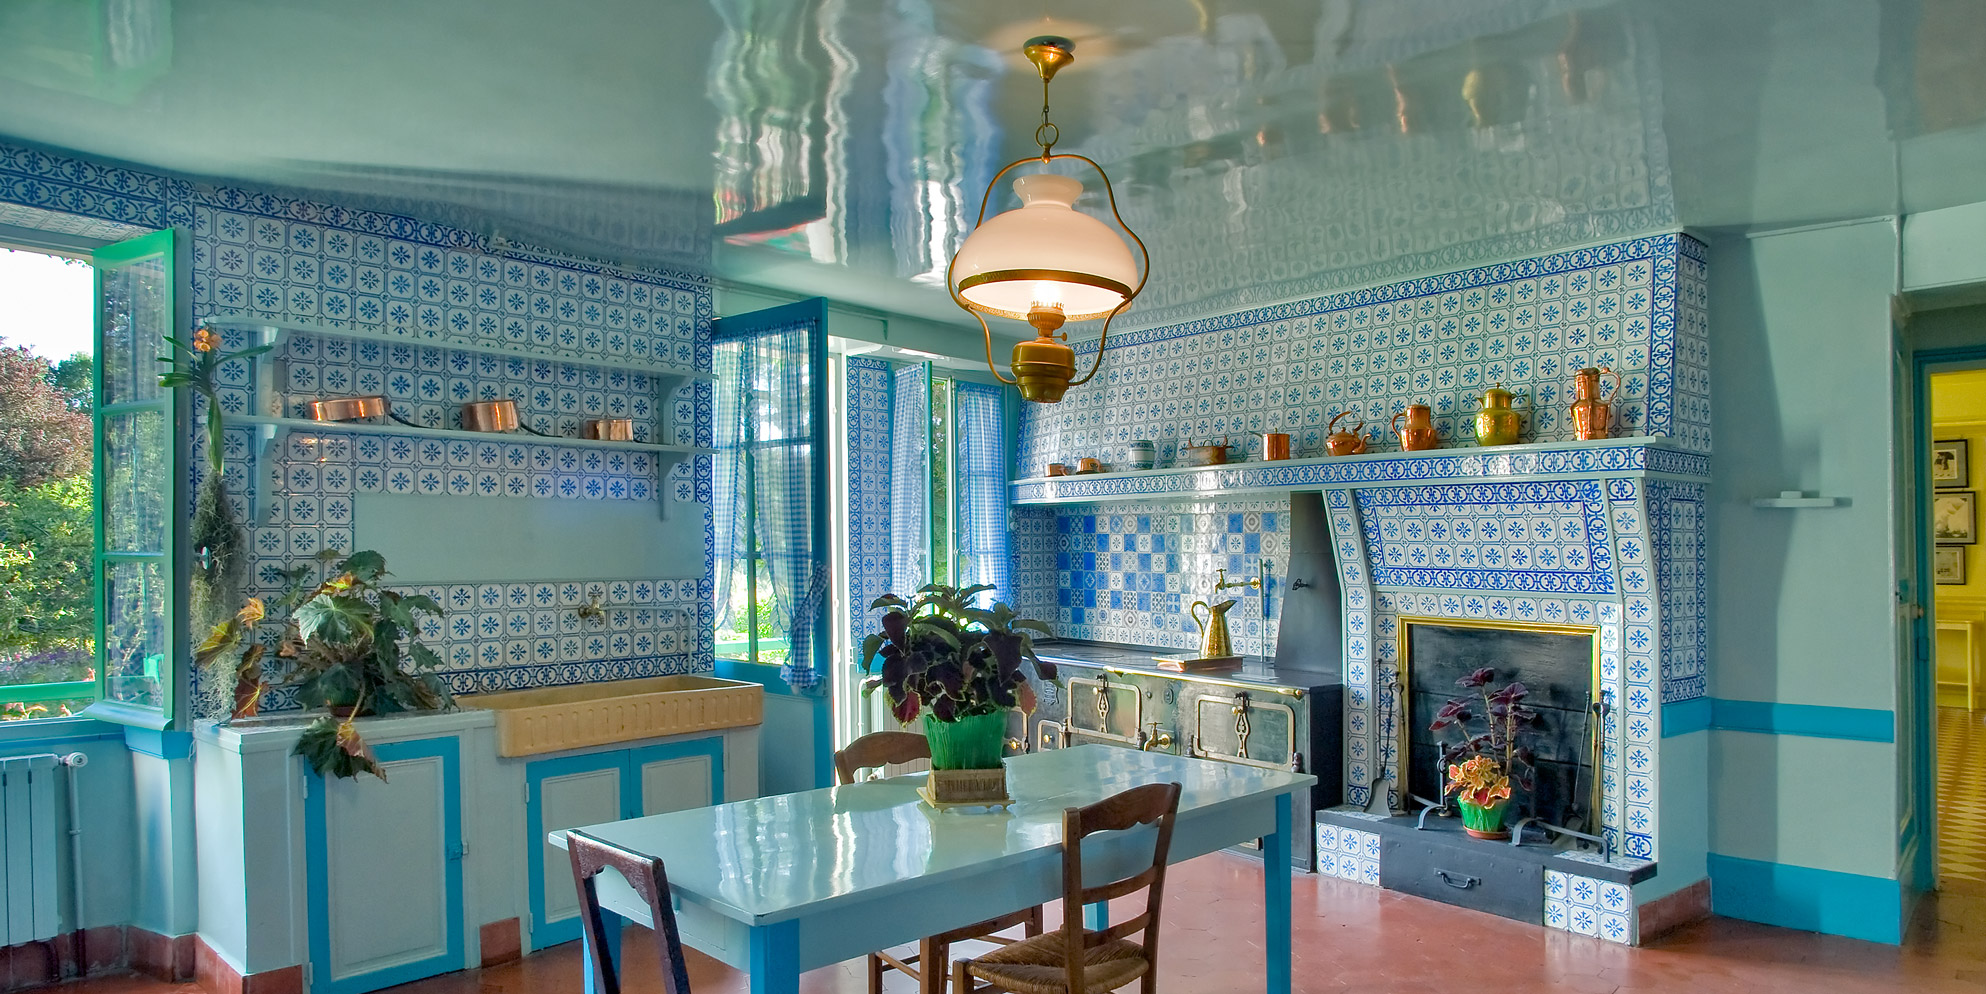 Monet's kitchen Giverny